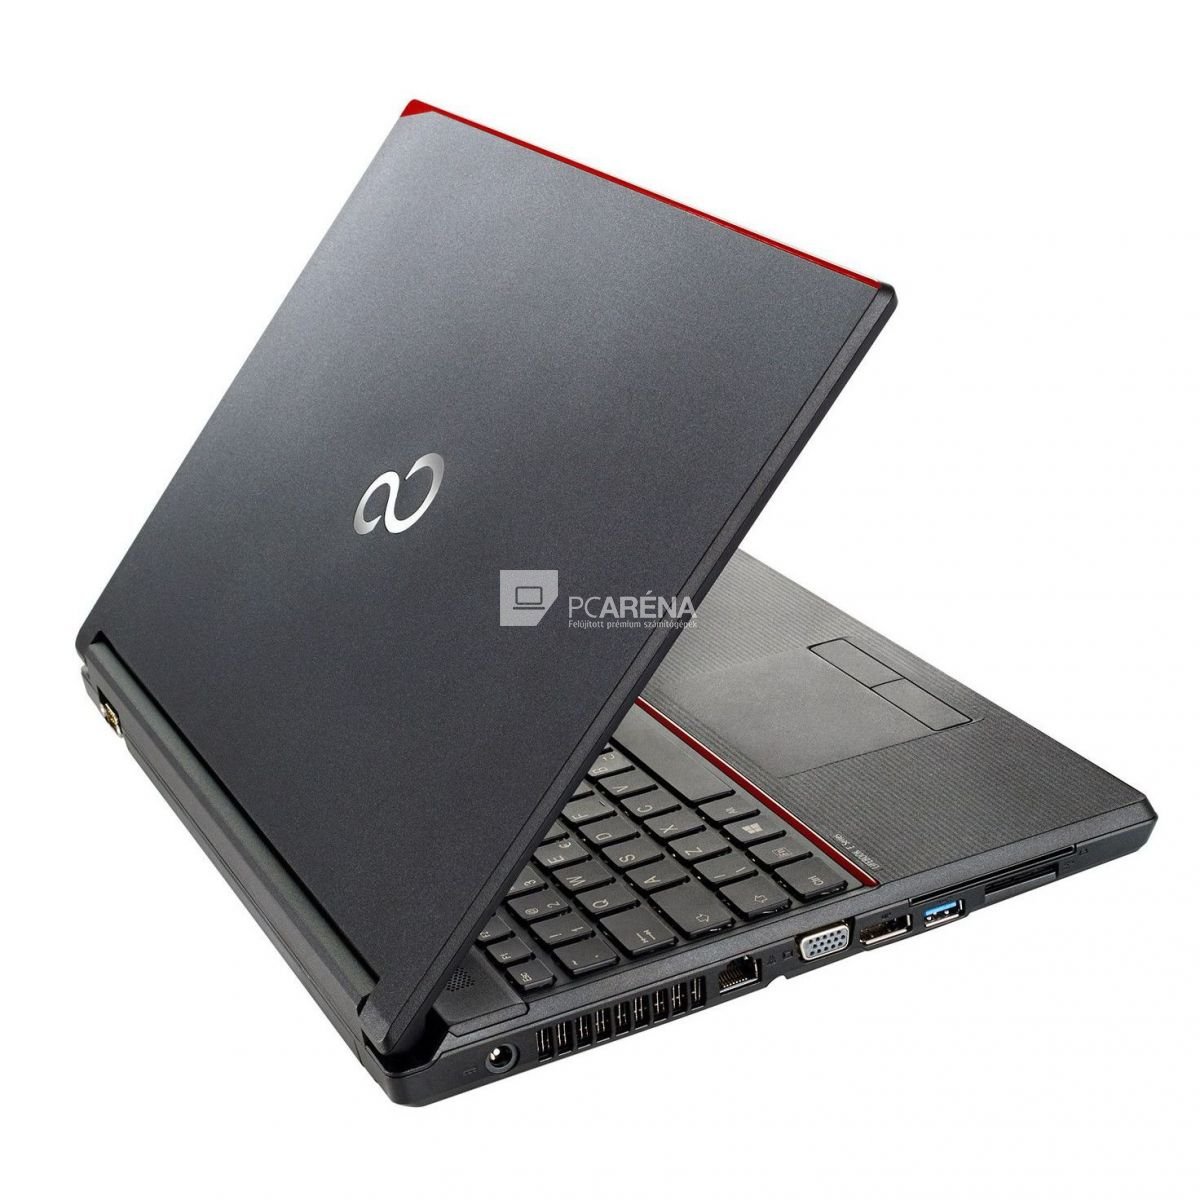 Fujitsu LifeBook E556 laptop